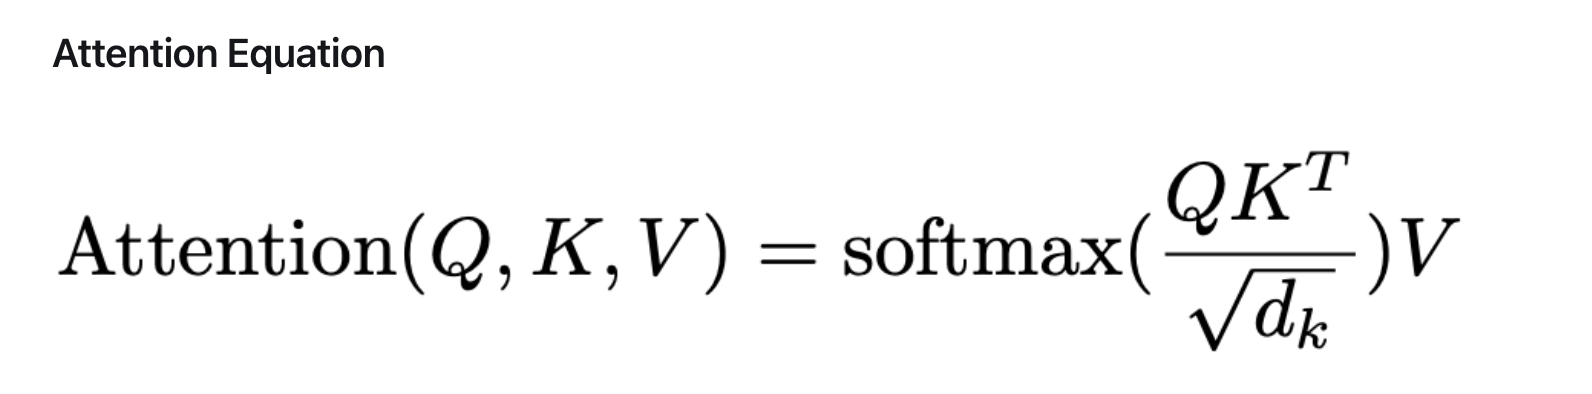 attn_equation.png